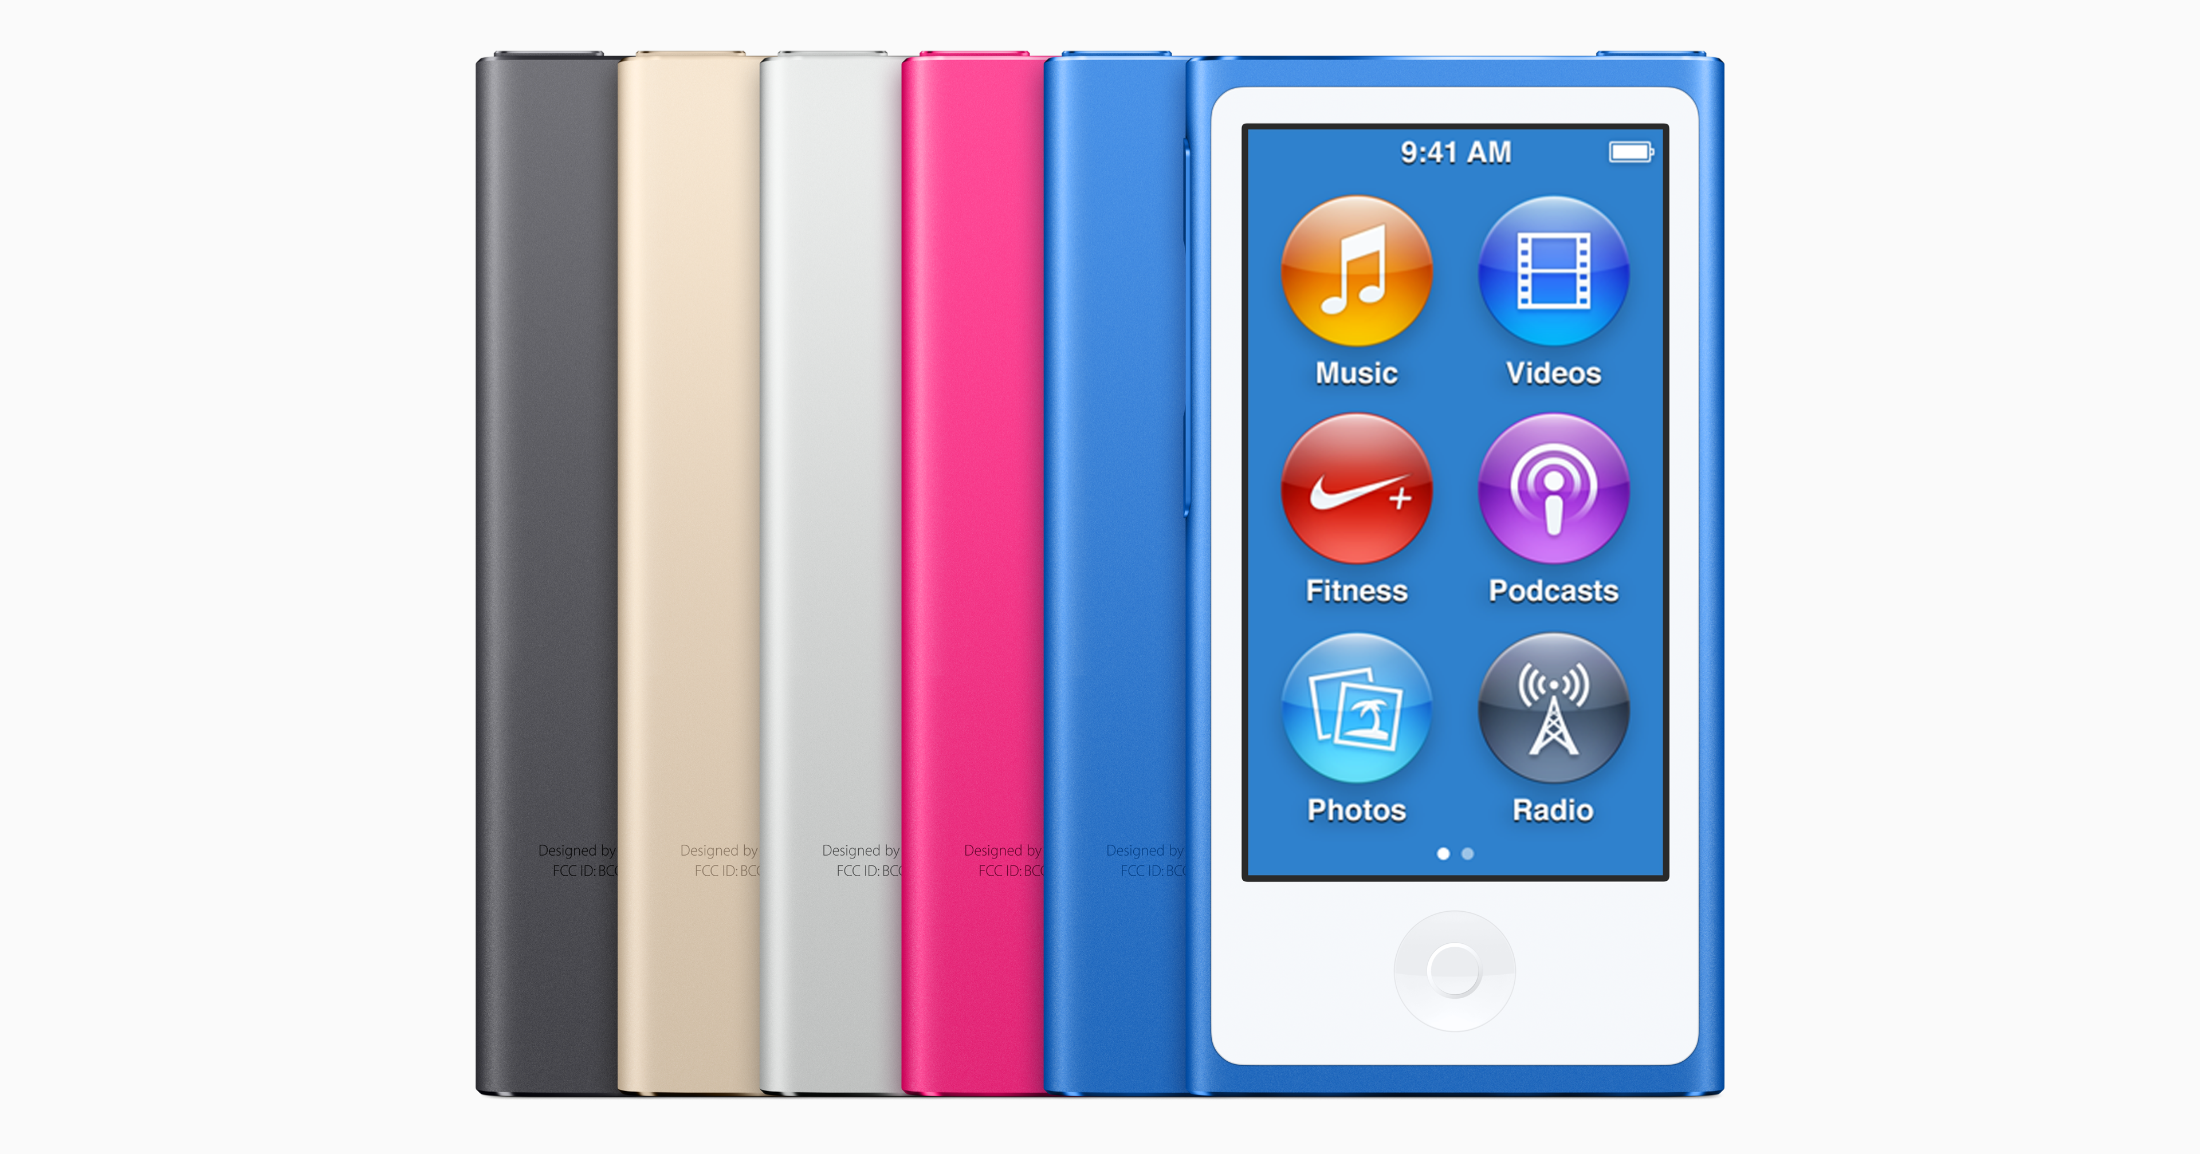 iPod nano (第 7 代) 